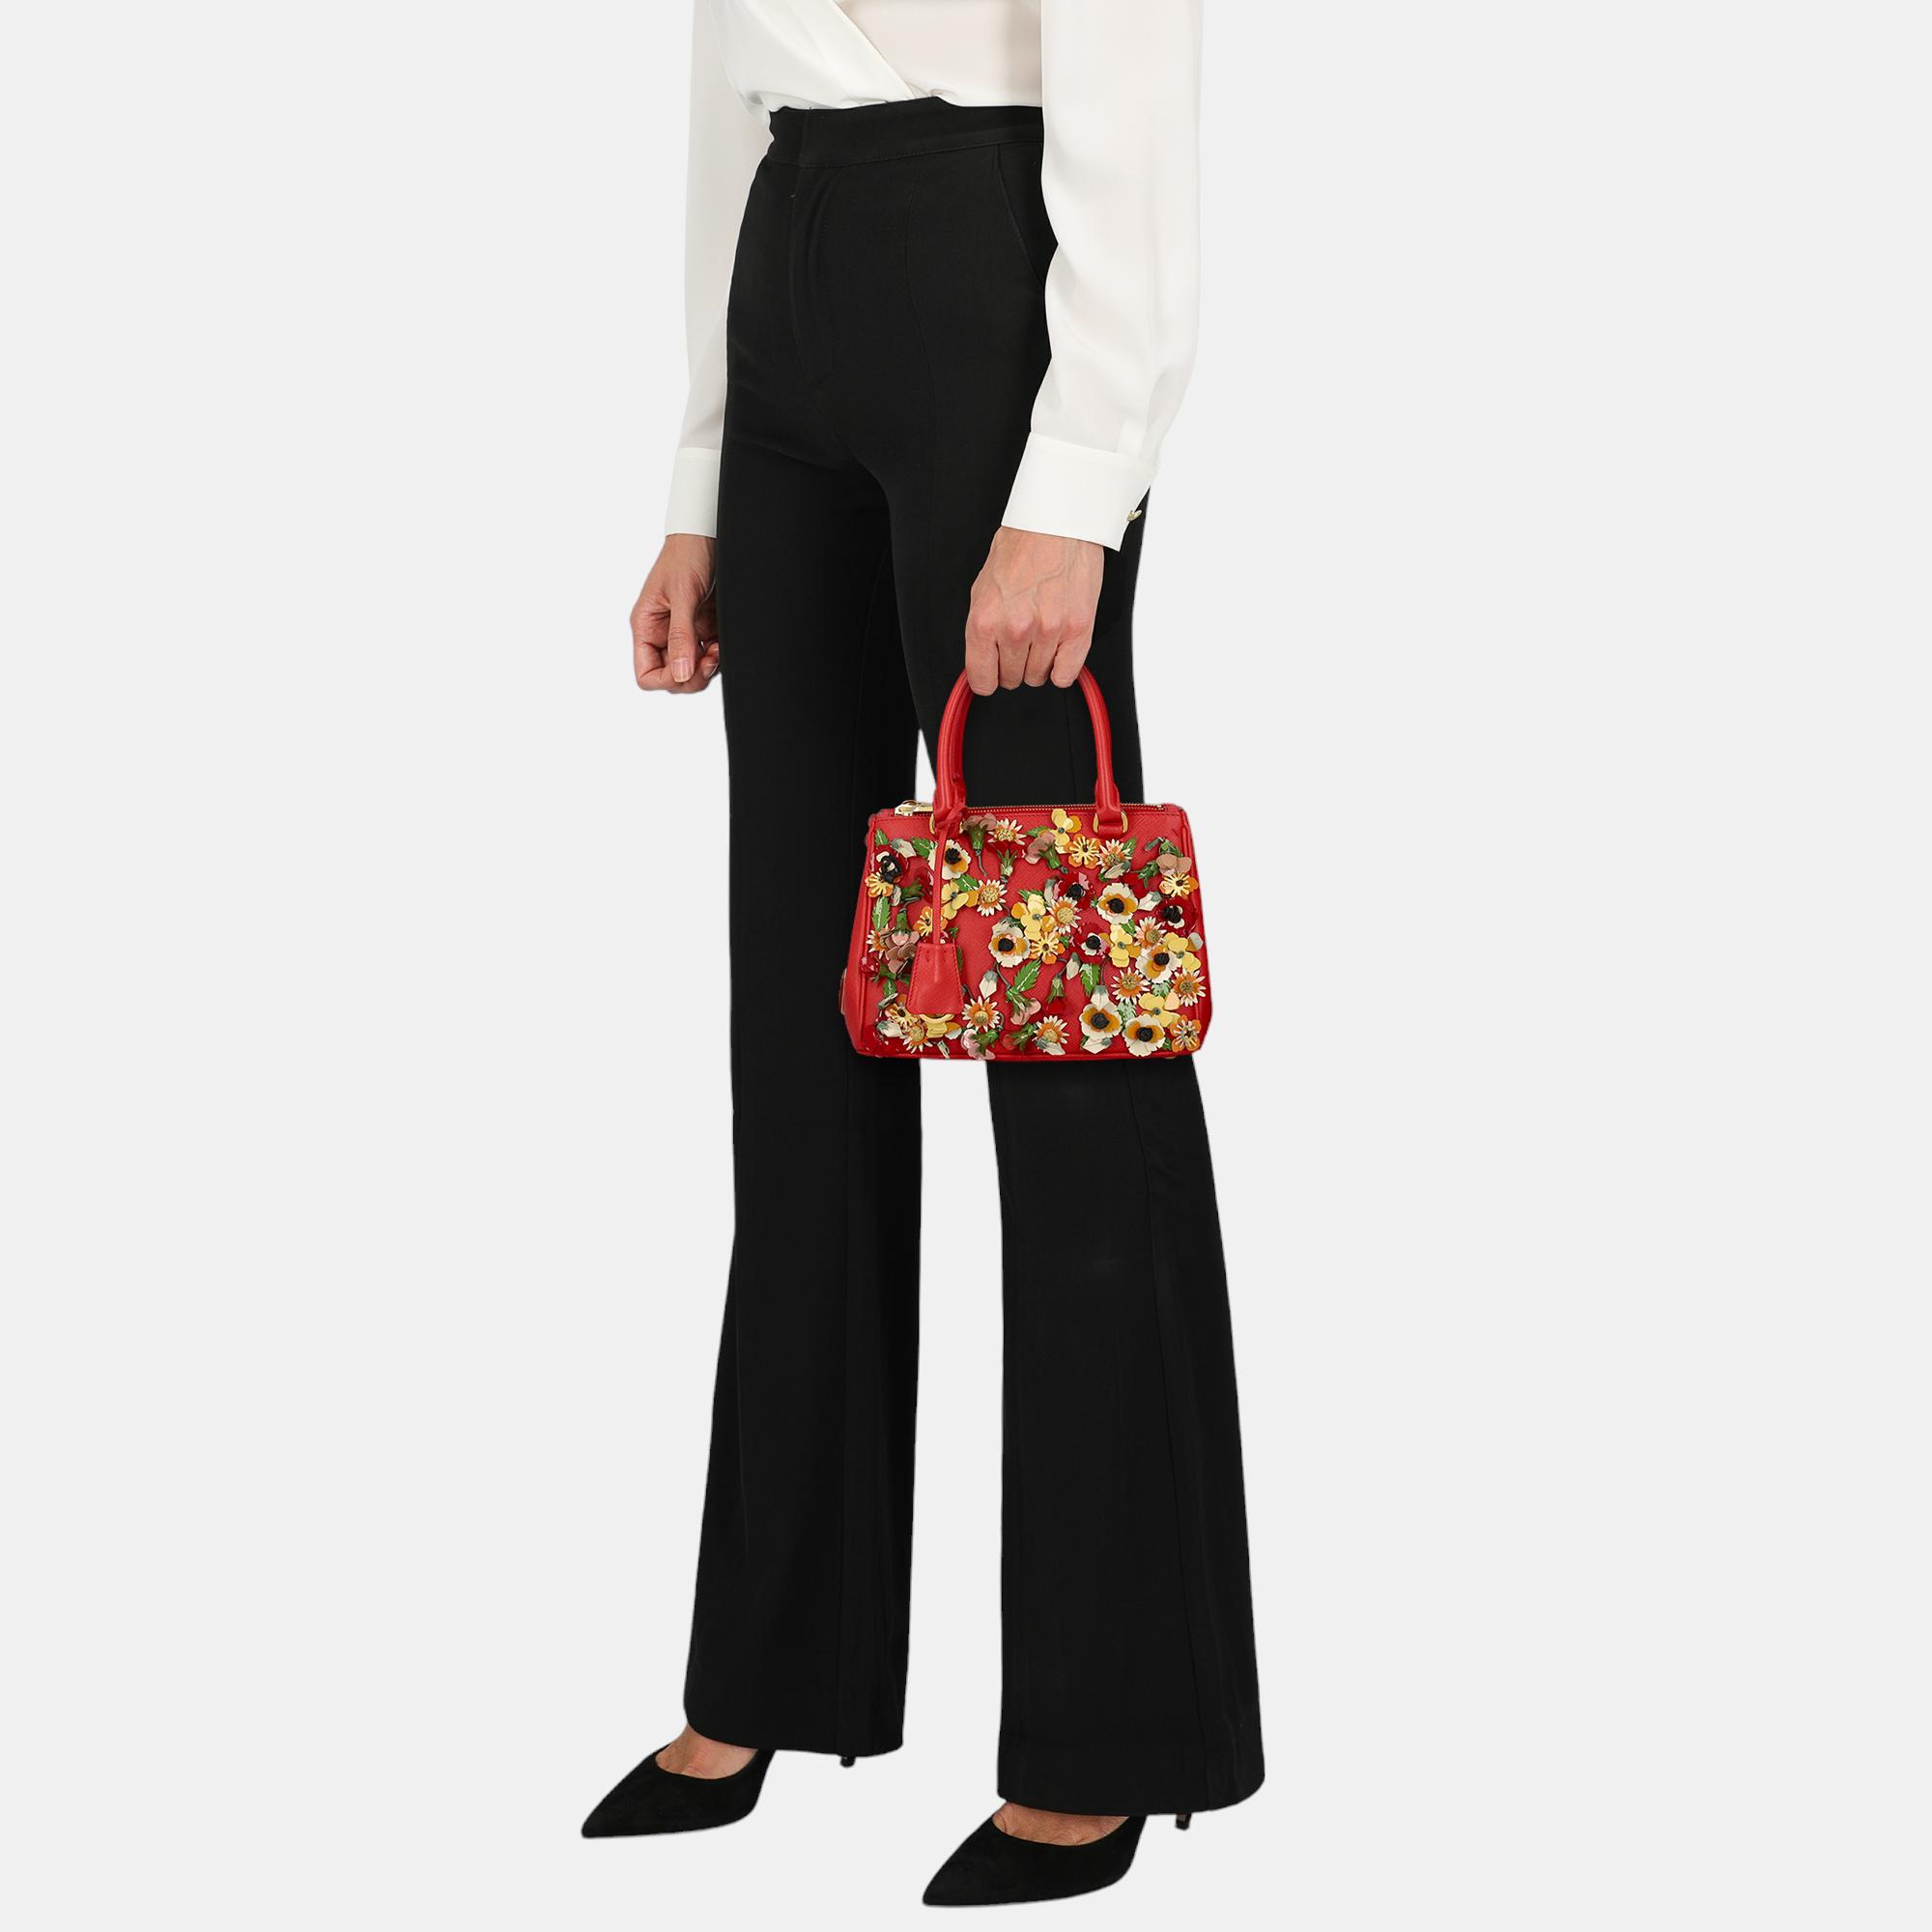 Prada  Women's Leather Handbag - Red - One Size